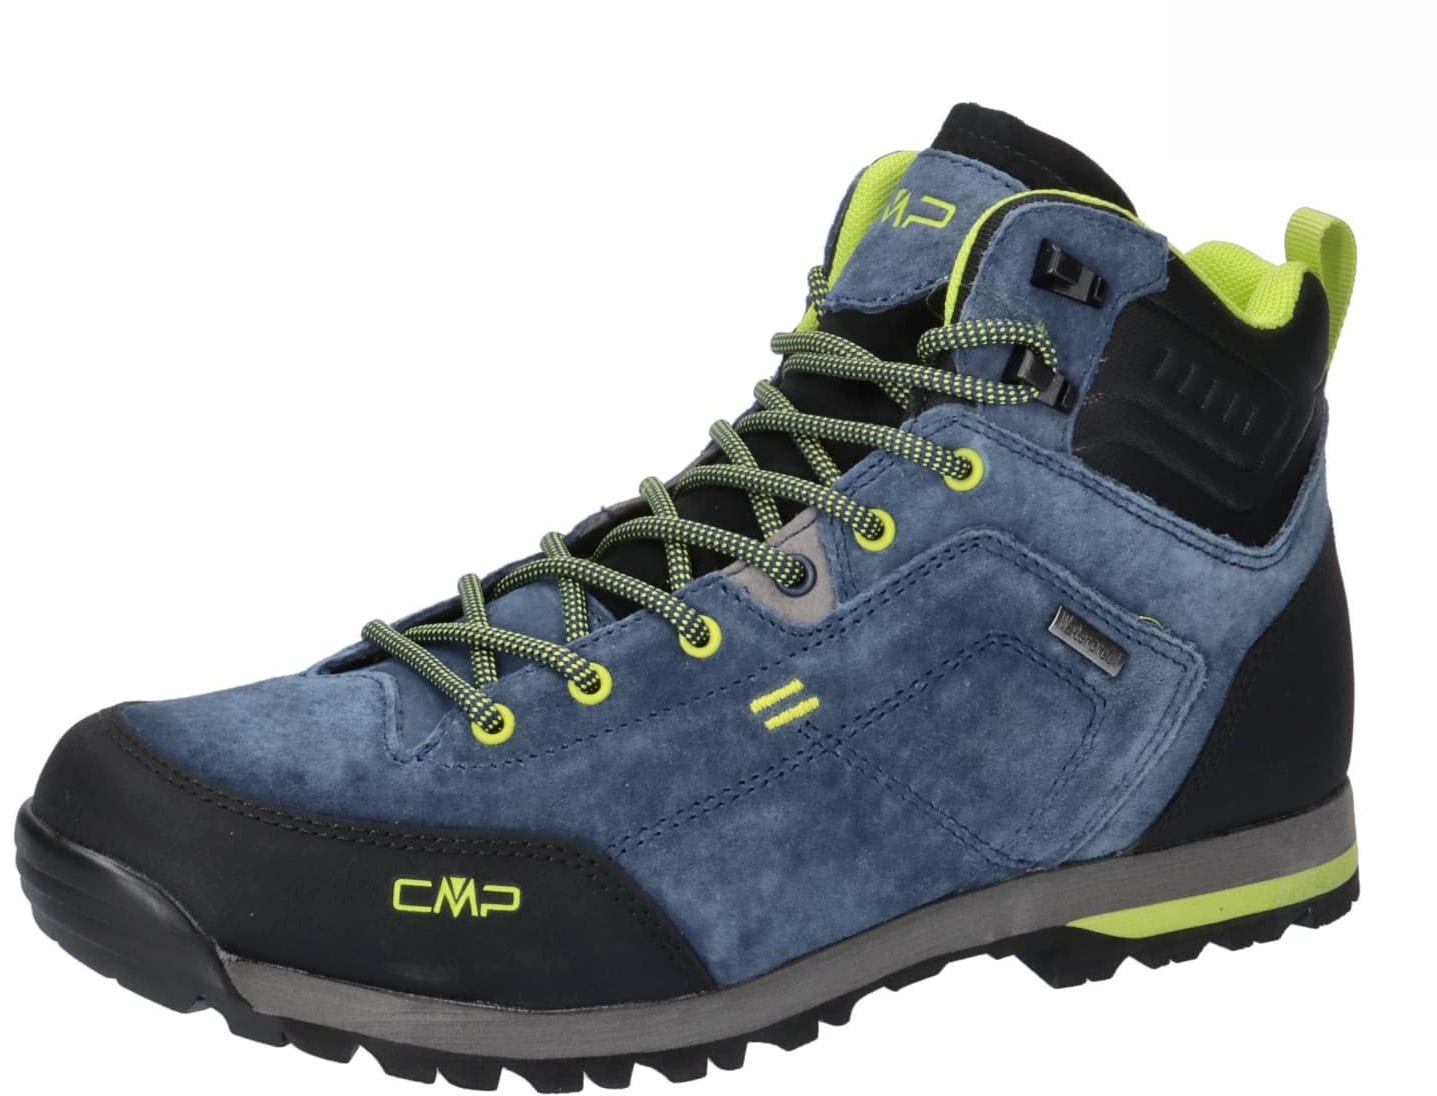 CMP Herren Alcor 2.0 Mid Trekking Shoes Wp-3q18577 Walking Shoe, B Blau Säure, 45 EU